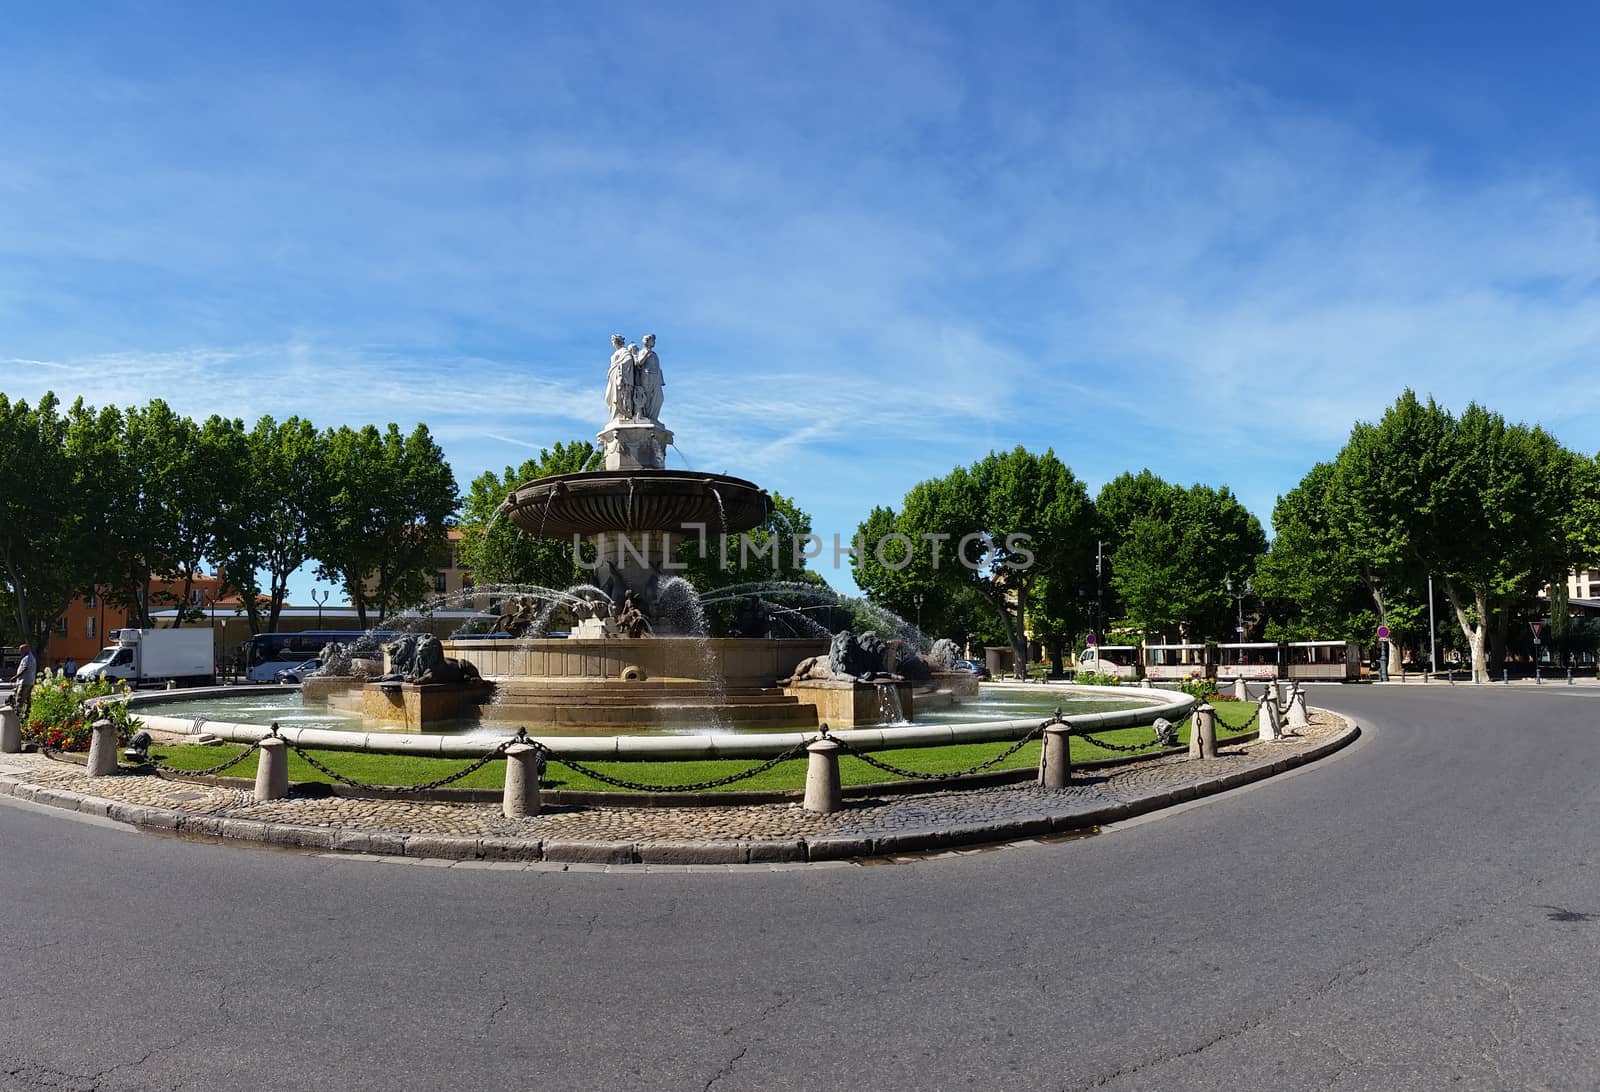 The Fontaine de la Rotonde is a historic fountain in Aix-en-Provence, Bouches-du-Rhone, France